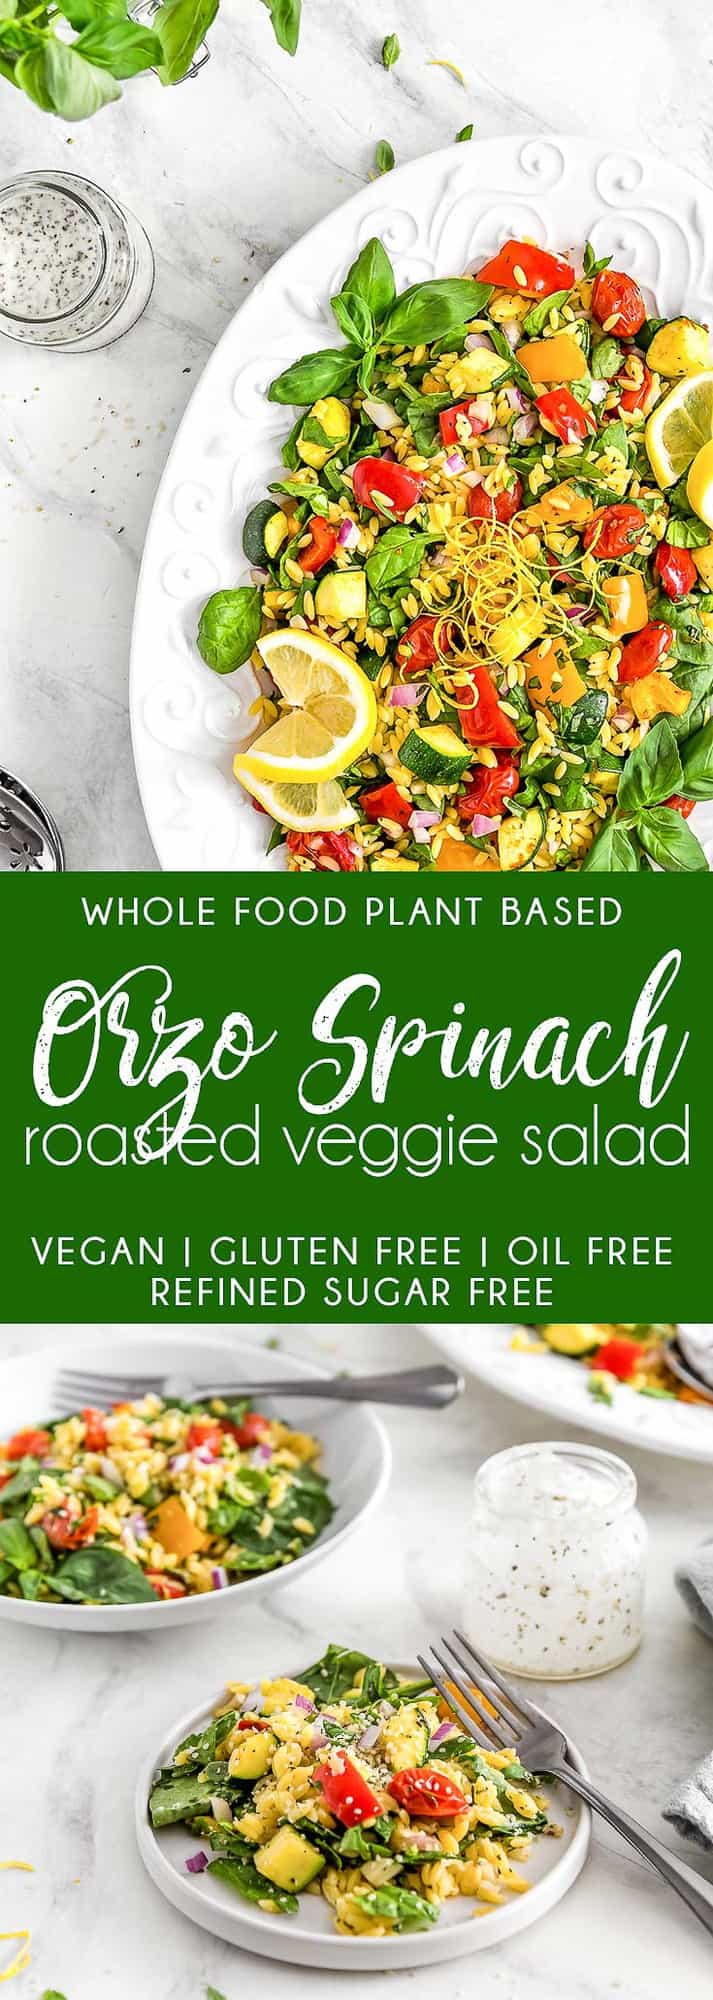 Orzo Spinach Roasted Veggie Salad, Vegan orzo salad, orzo, spinach, vegan salad, vegan pasta salad, plant based, vegan, vegetarian, whole food plant based, gluten free, recipe, wfpb, healthy, healthy vegan, oil free, no refined sugar, no oil, refined sugar free, dairy free, lunch, easy recipe, fast recipe, quick recipe, sides, picnic, summer recipe, picnic recipe, roasted veggies